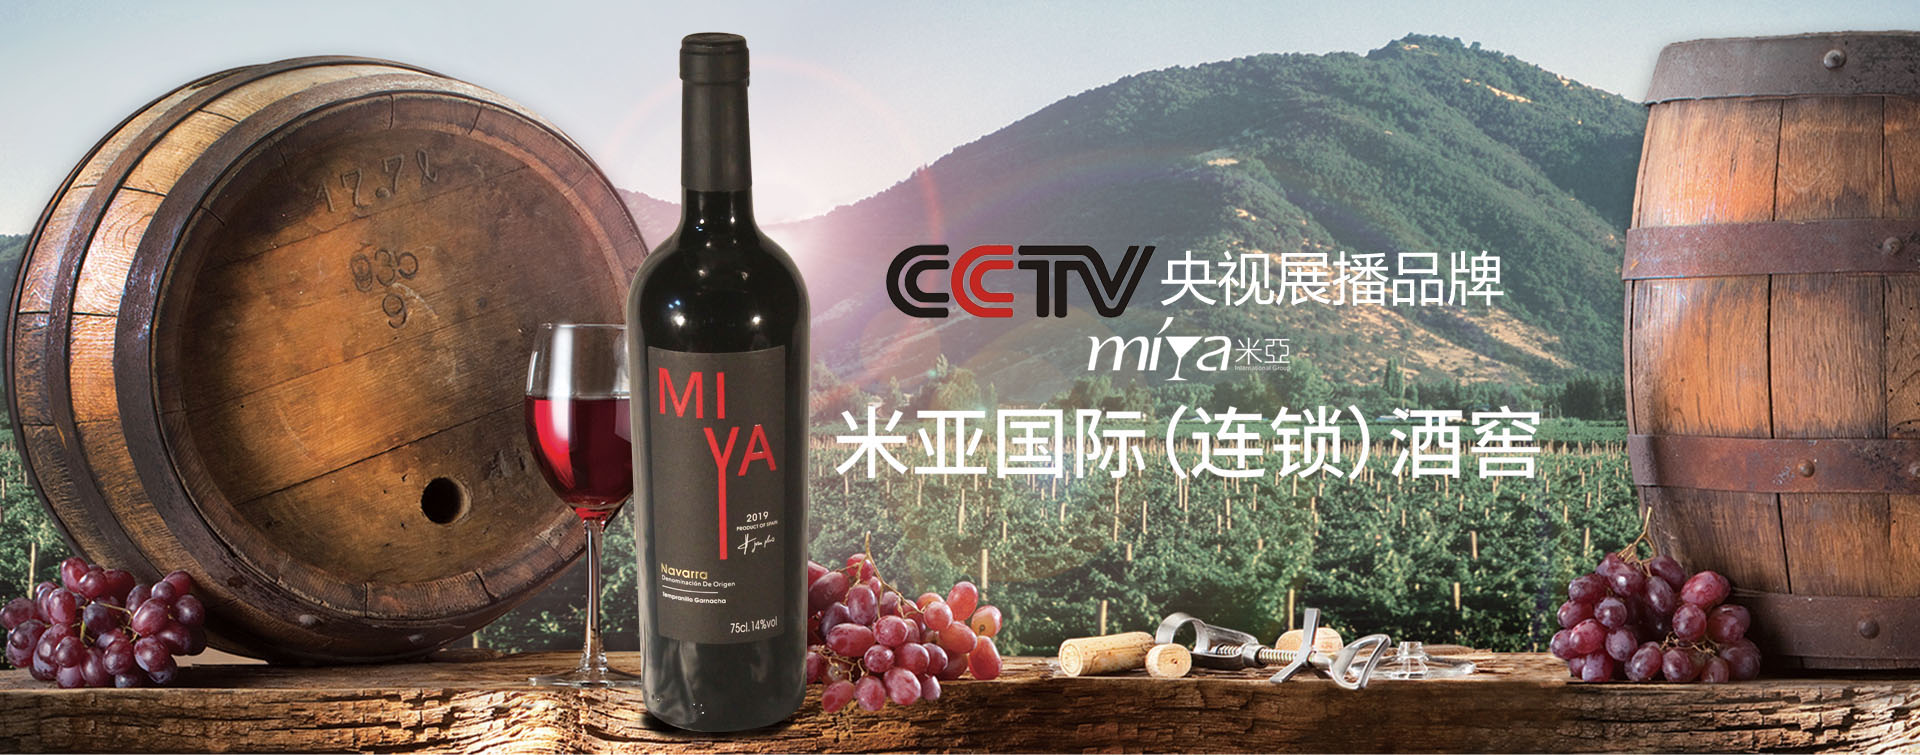 CCTV米亚宣传片